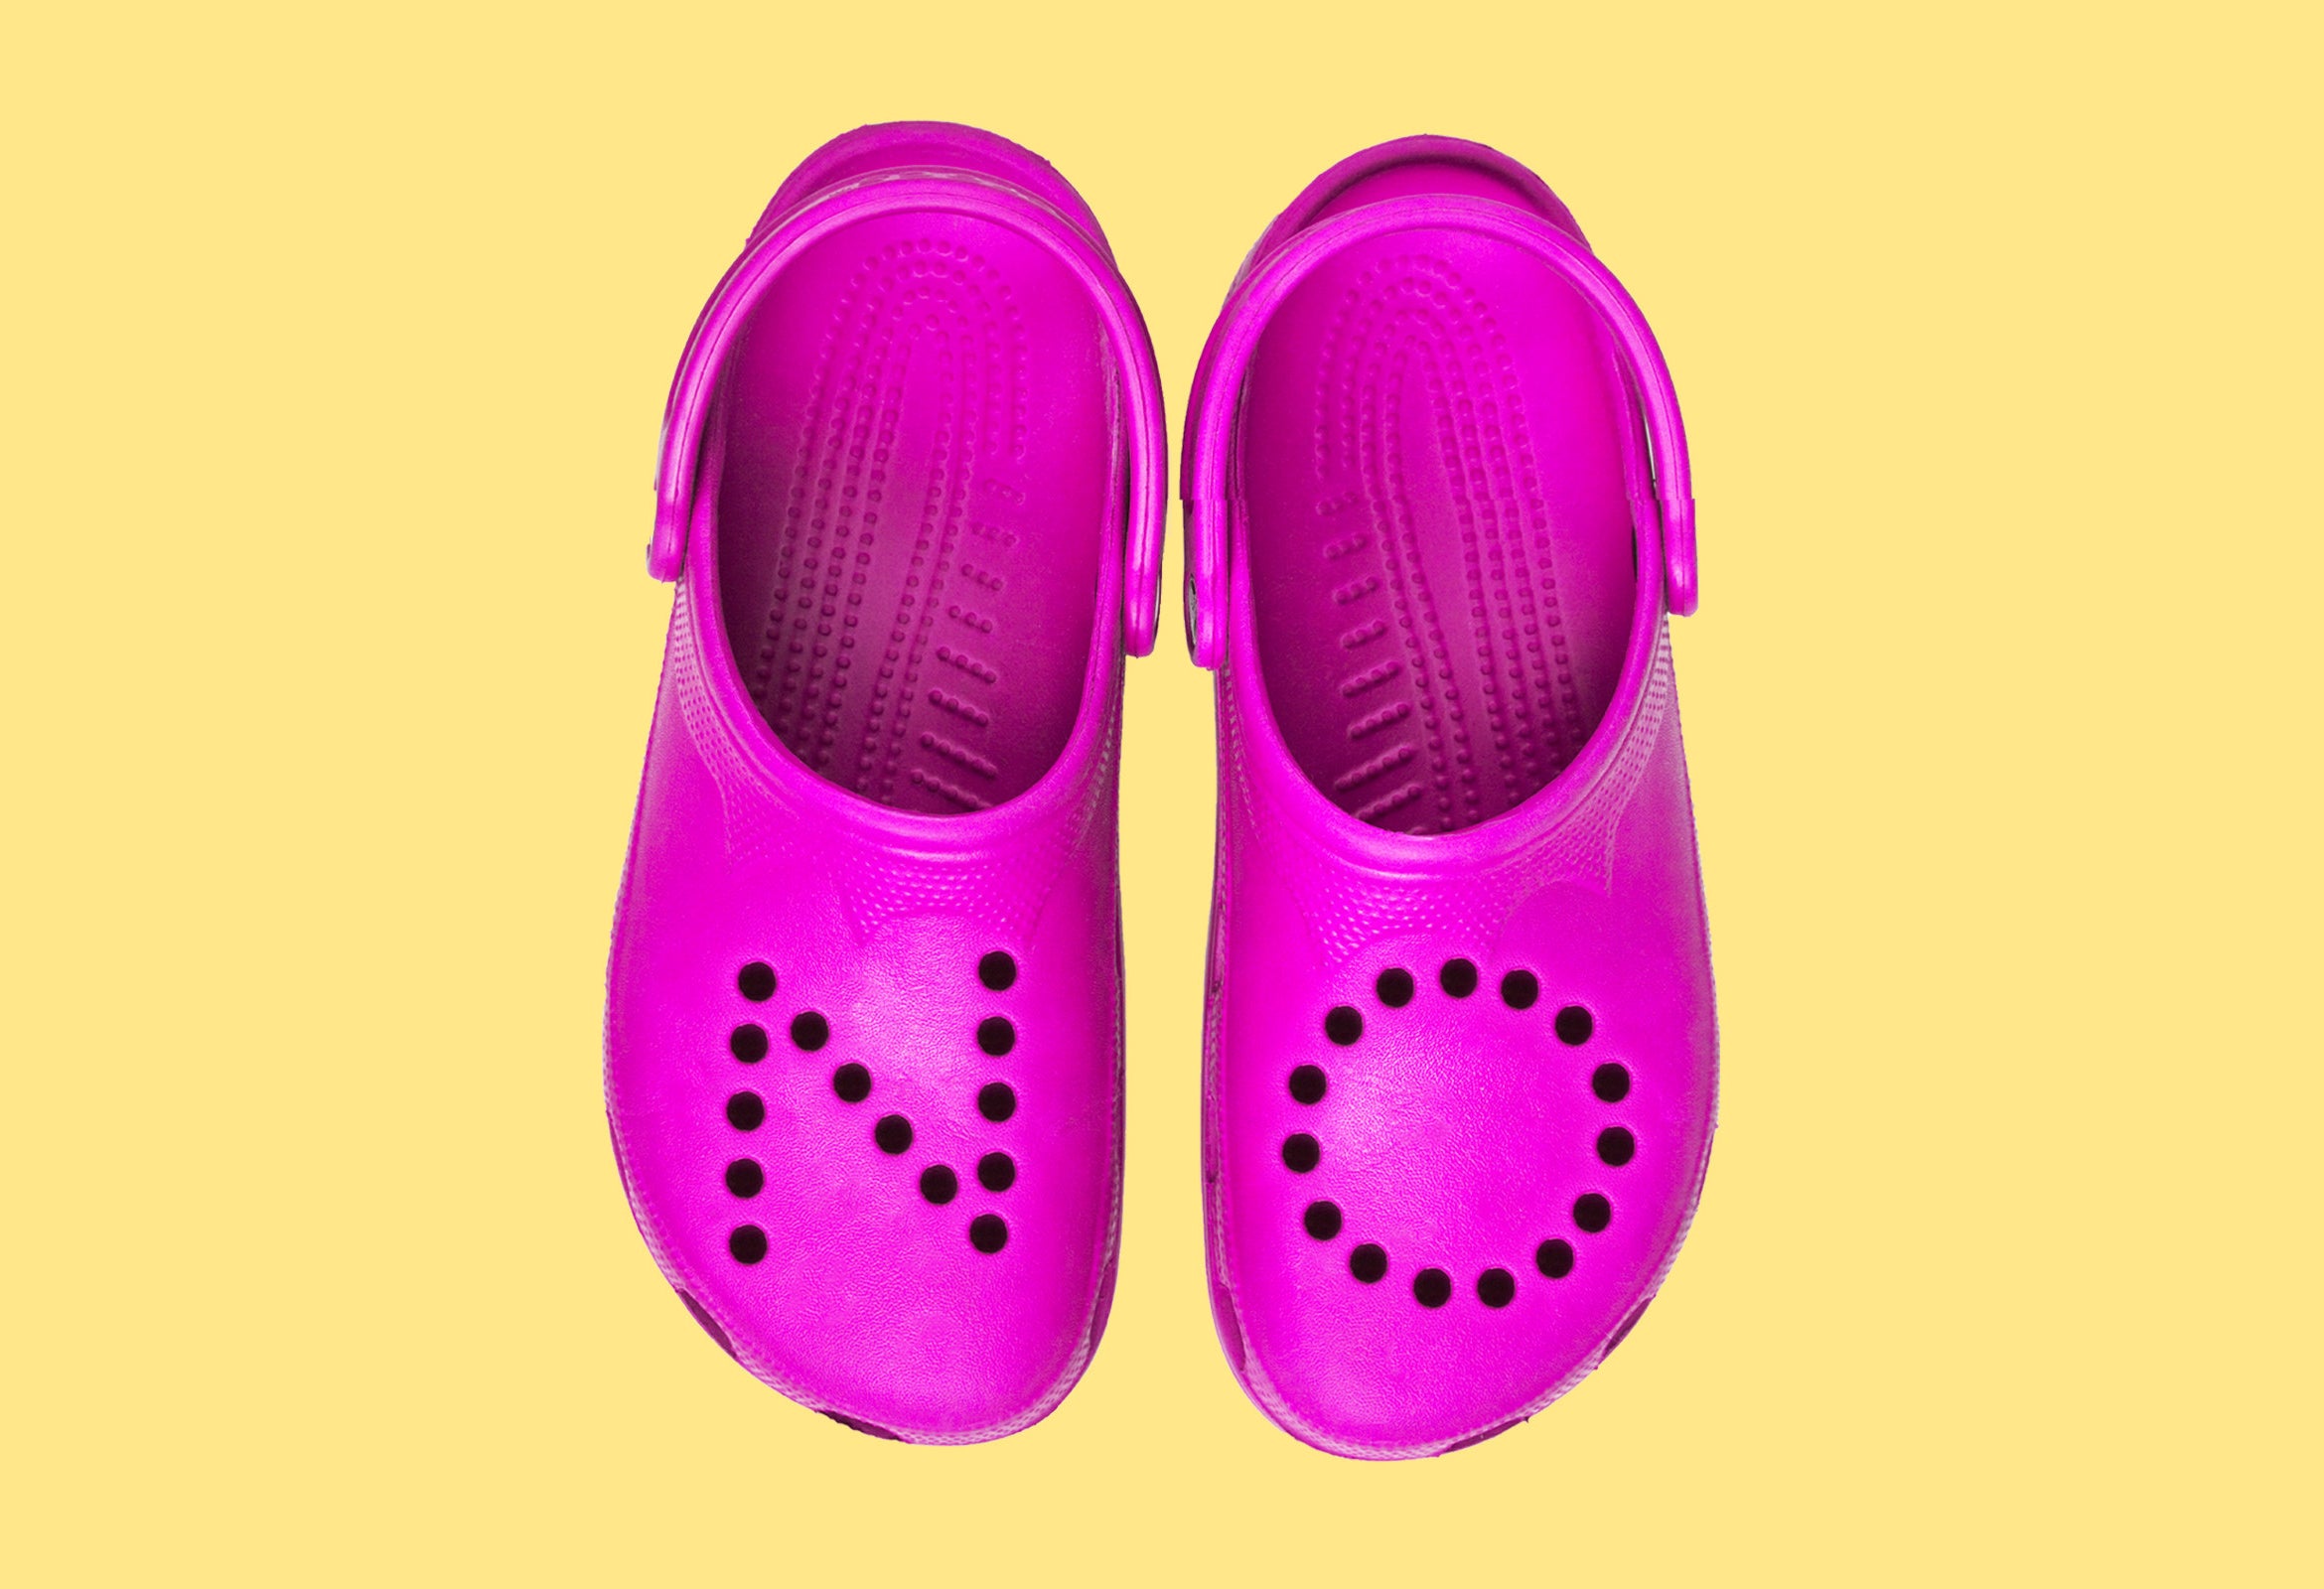 Nicki Minaj Wore Pink Crocs and Not Much Else